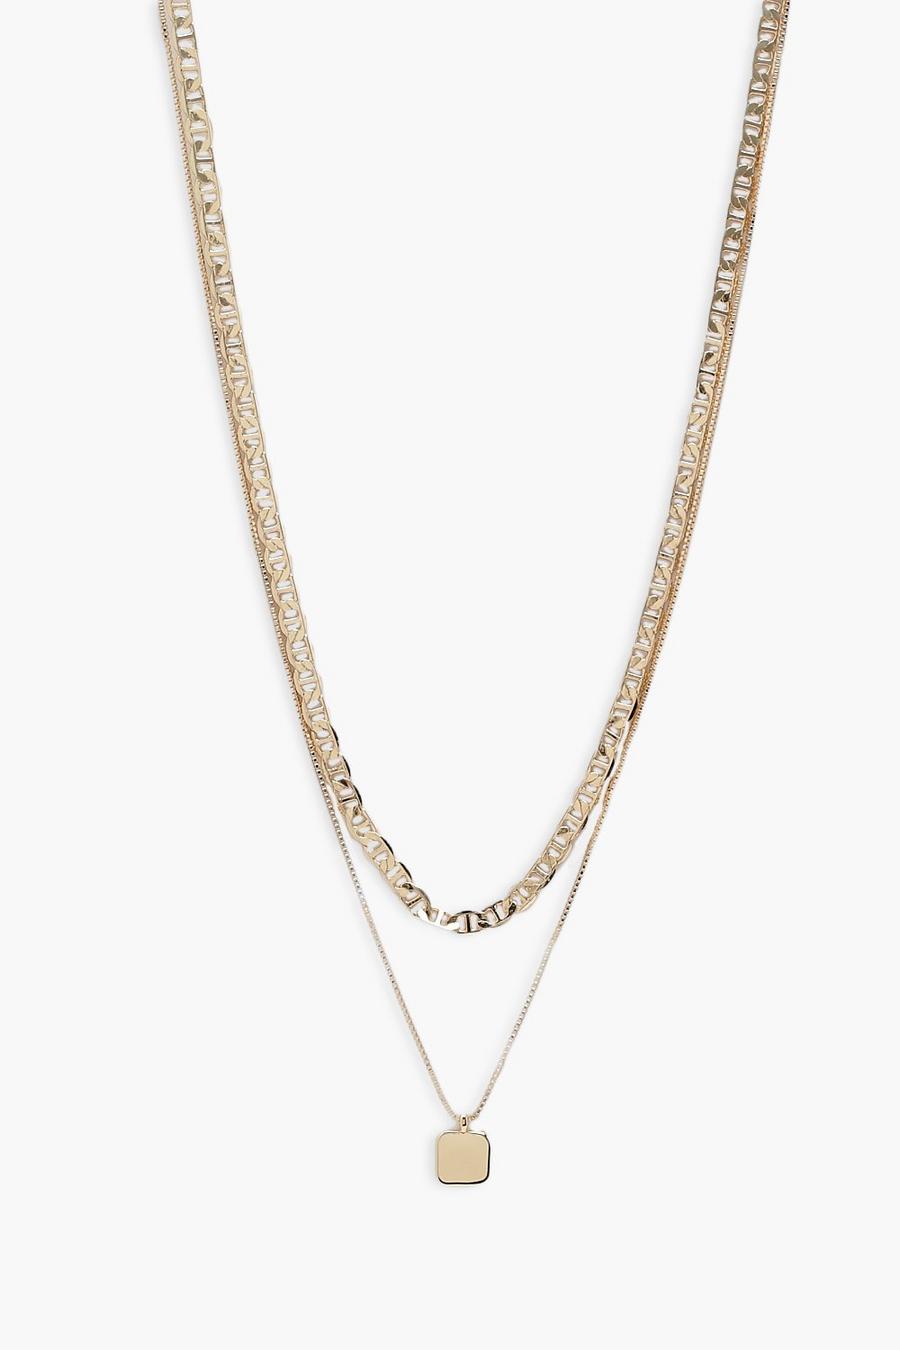 Gold metallic Greek Key Link Chain Necklace 